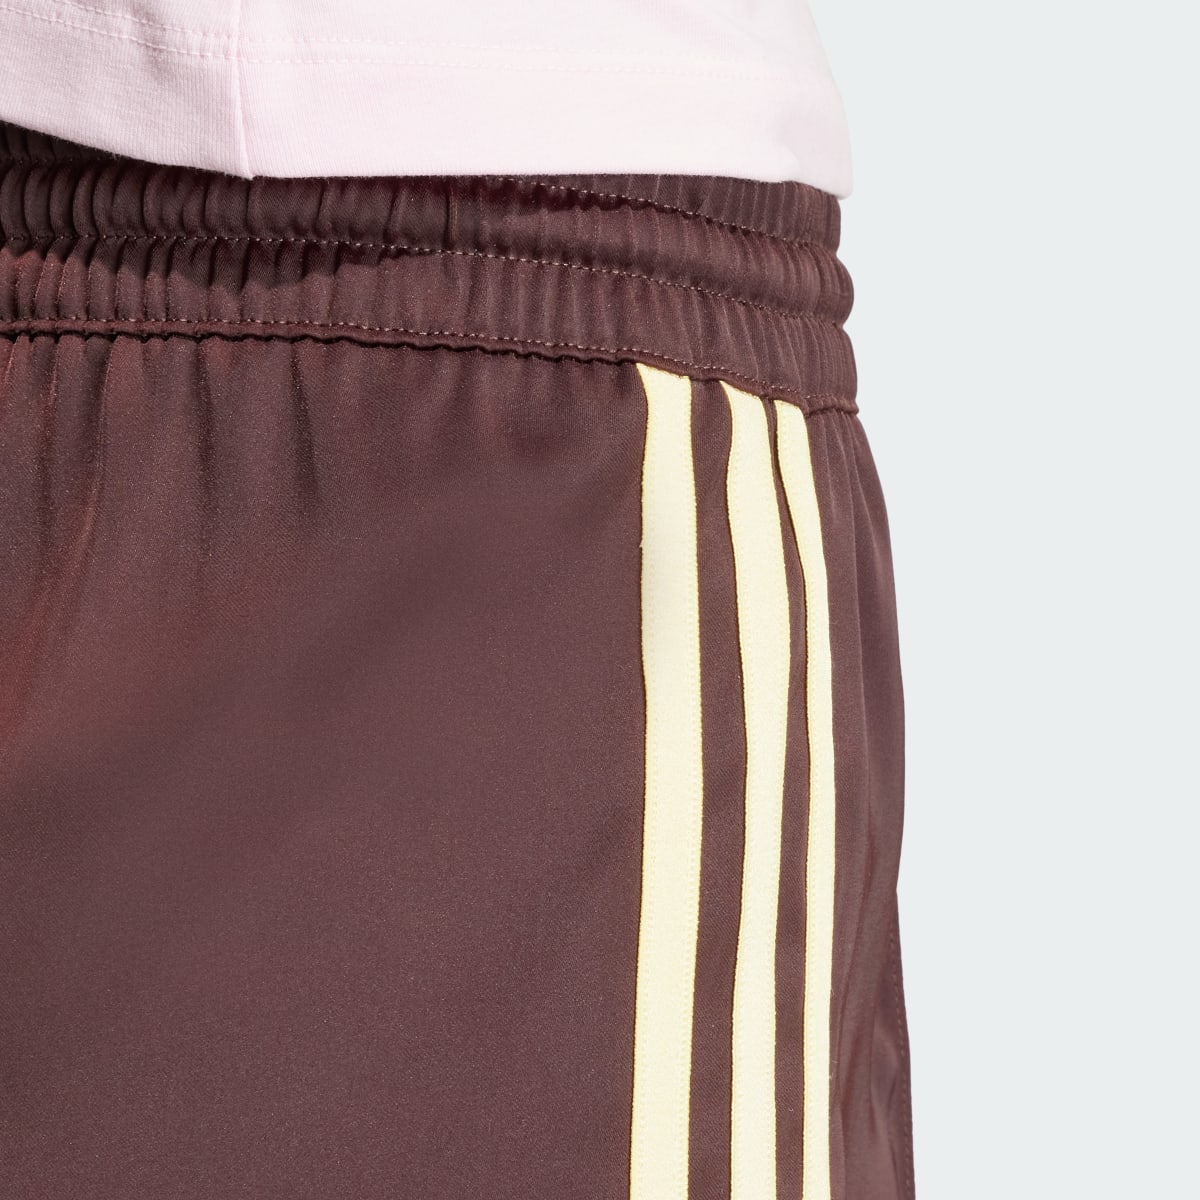 Adidas 3-Stripes Satin Shorts. 7